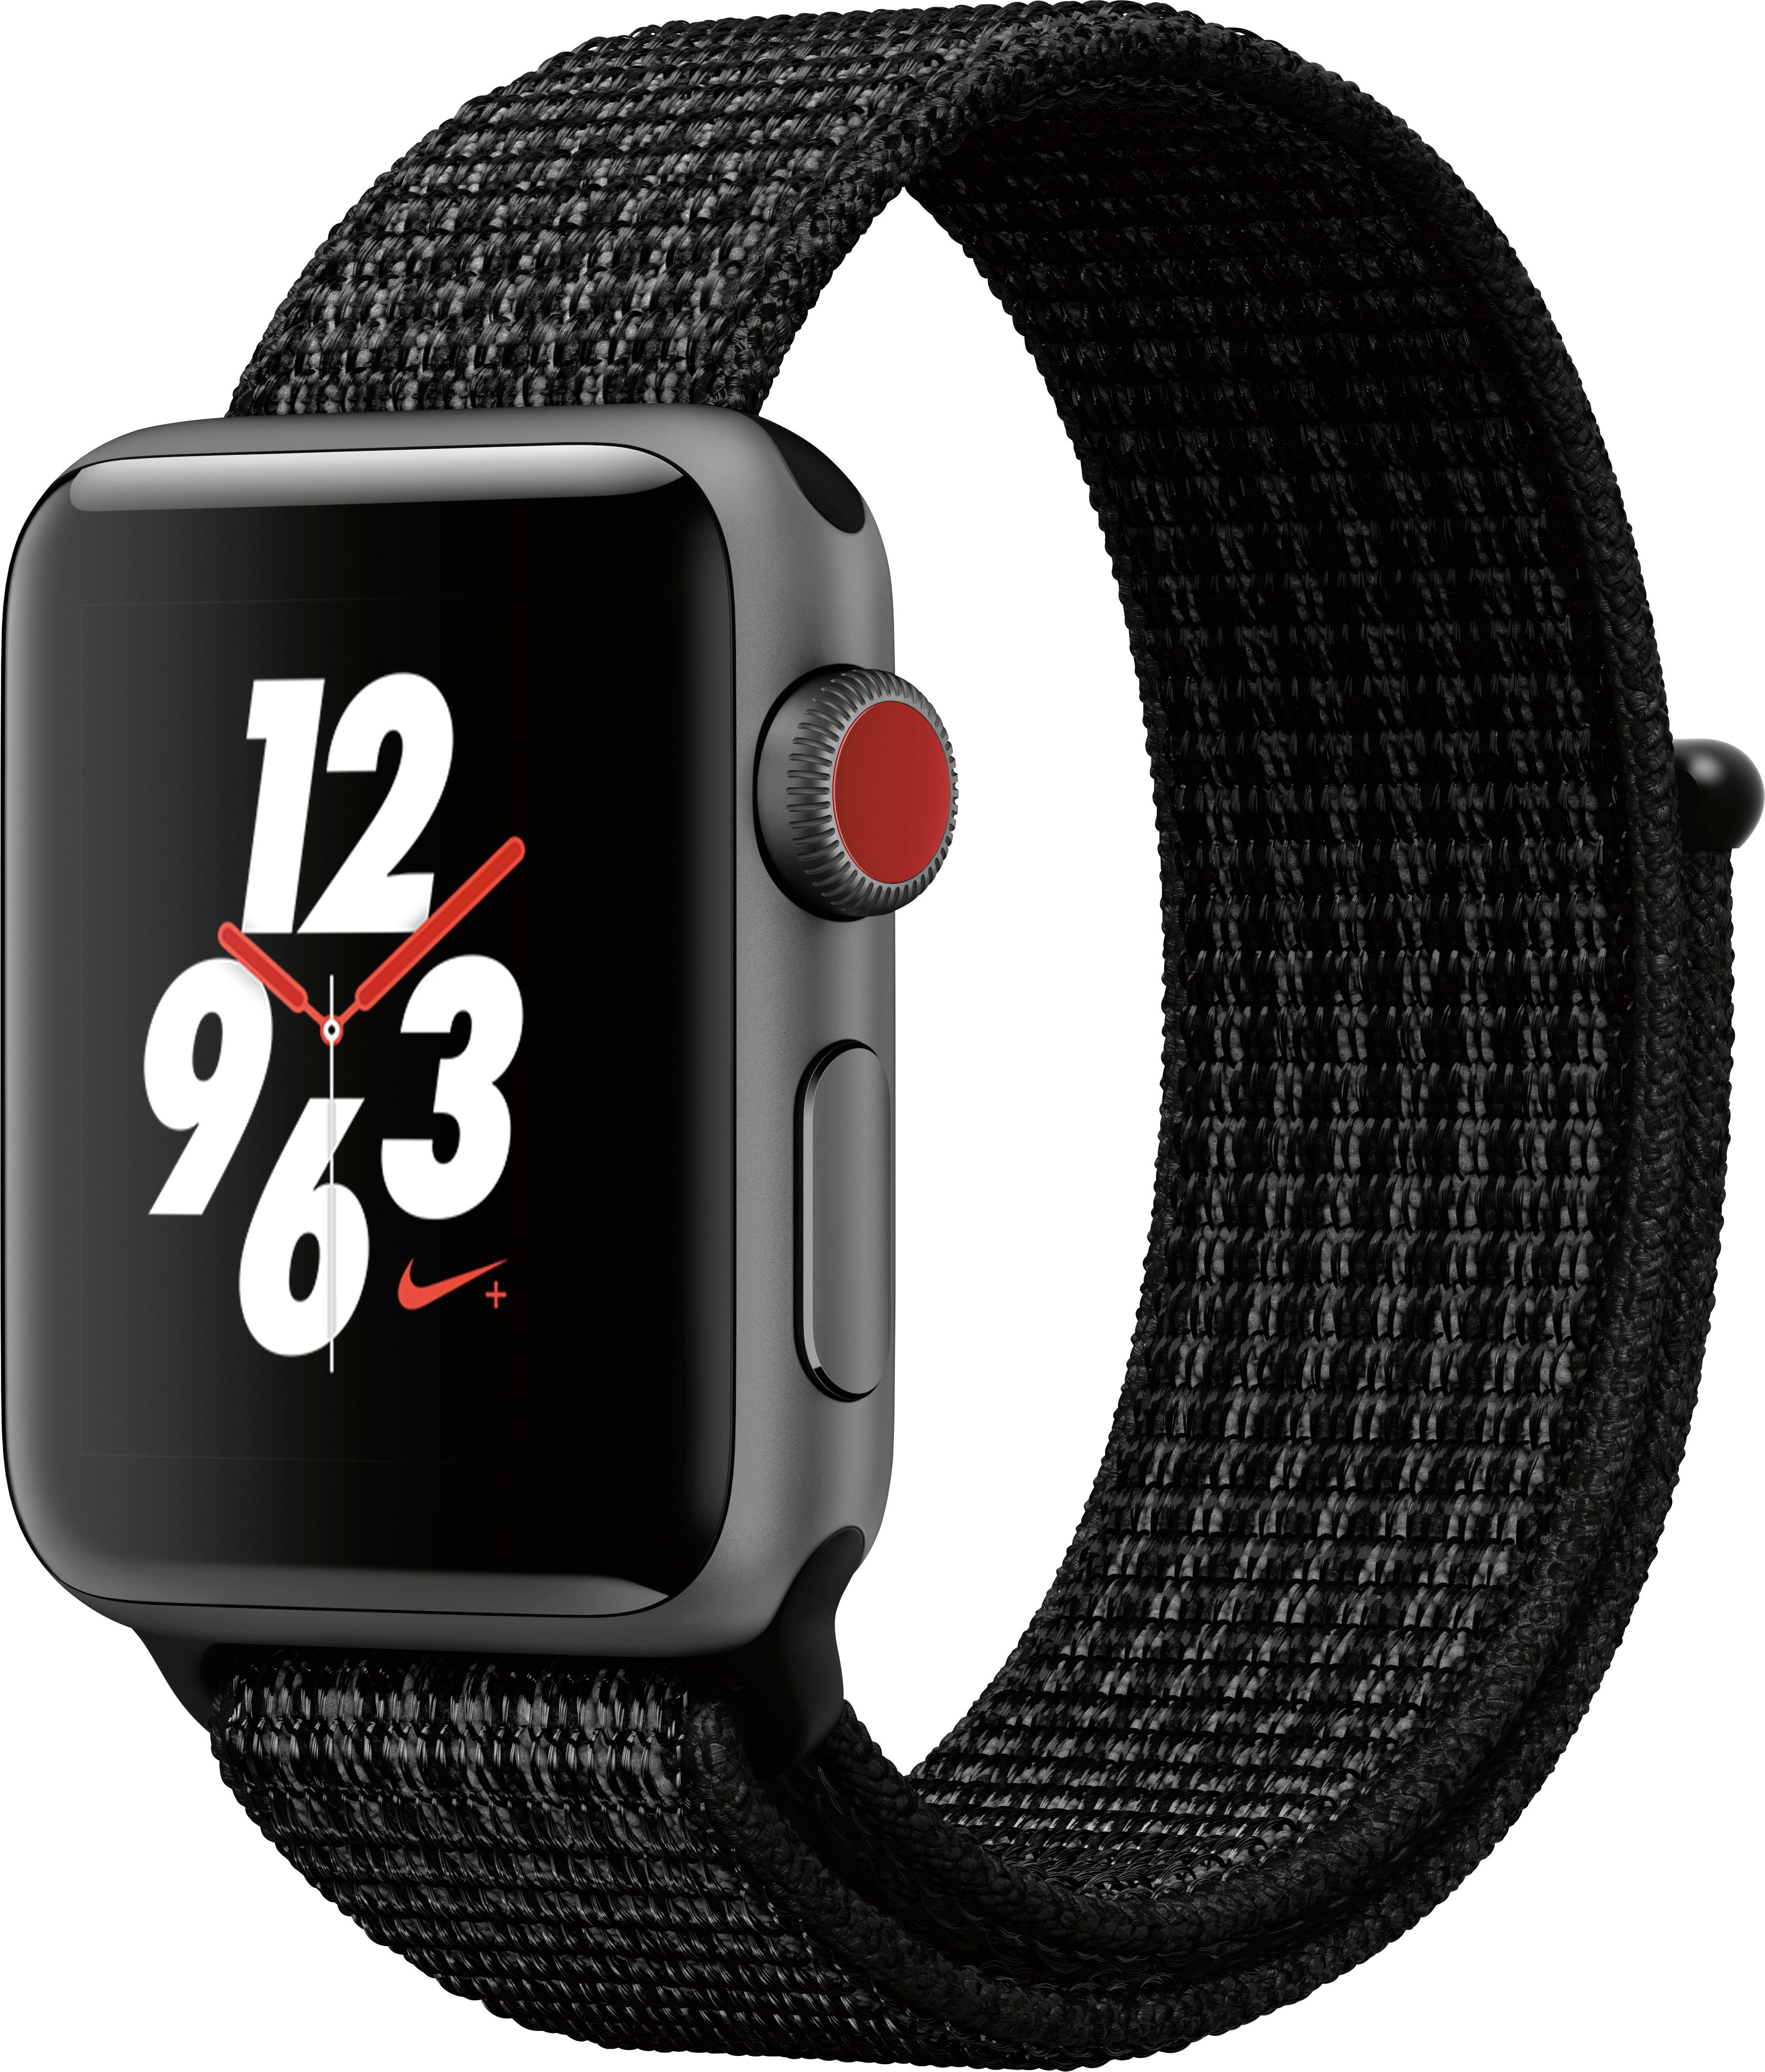 Nike Apple Watch Series 3 Flash Sales, 51% OFF | lagence.tv